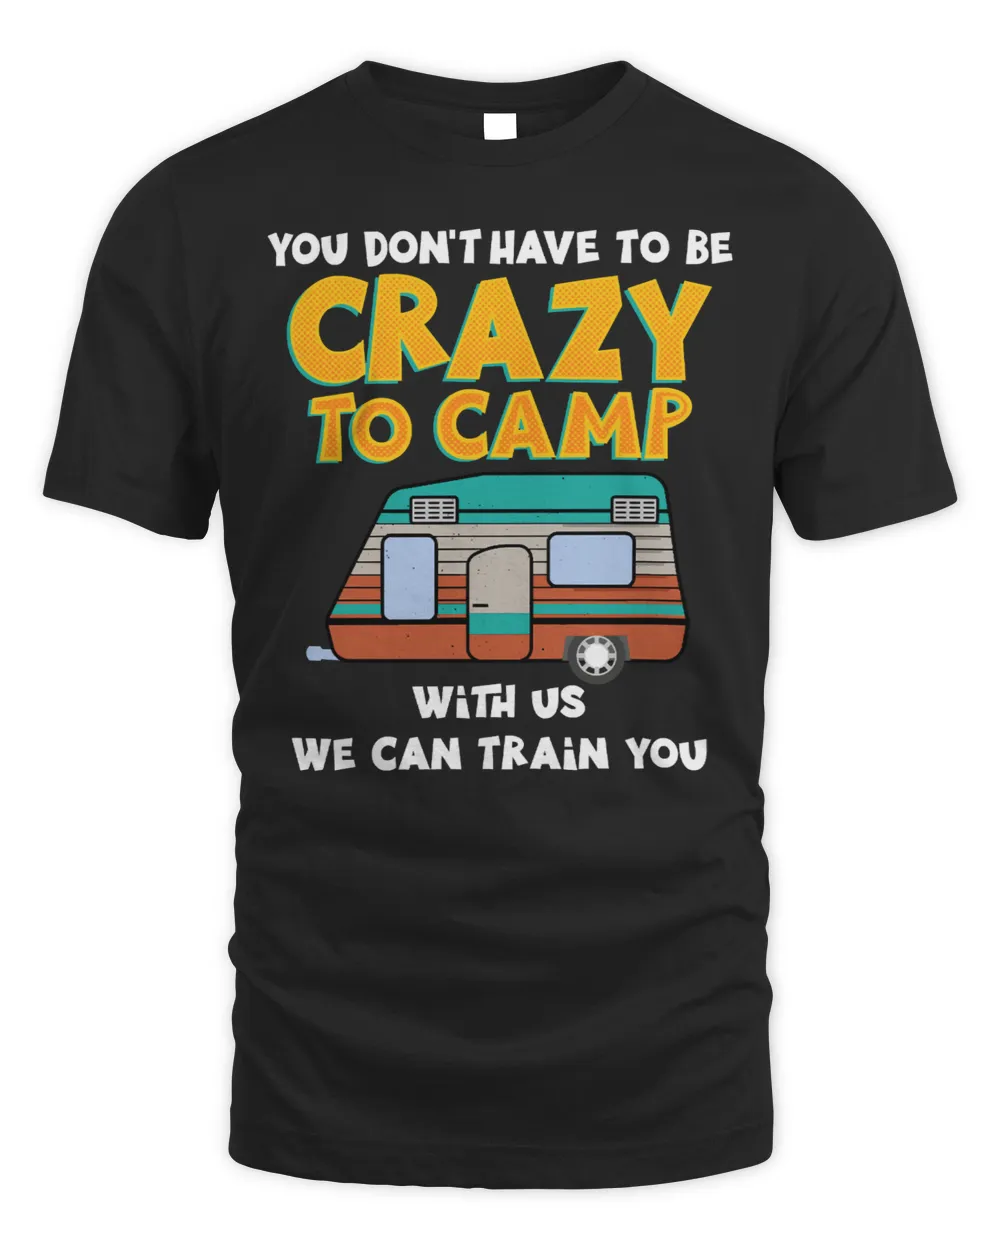 Camping Camp FunnyLover CrazyJokeDesign Idea des print camp Camp er 2 Camper